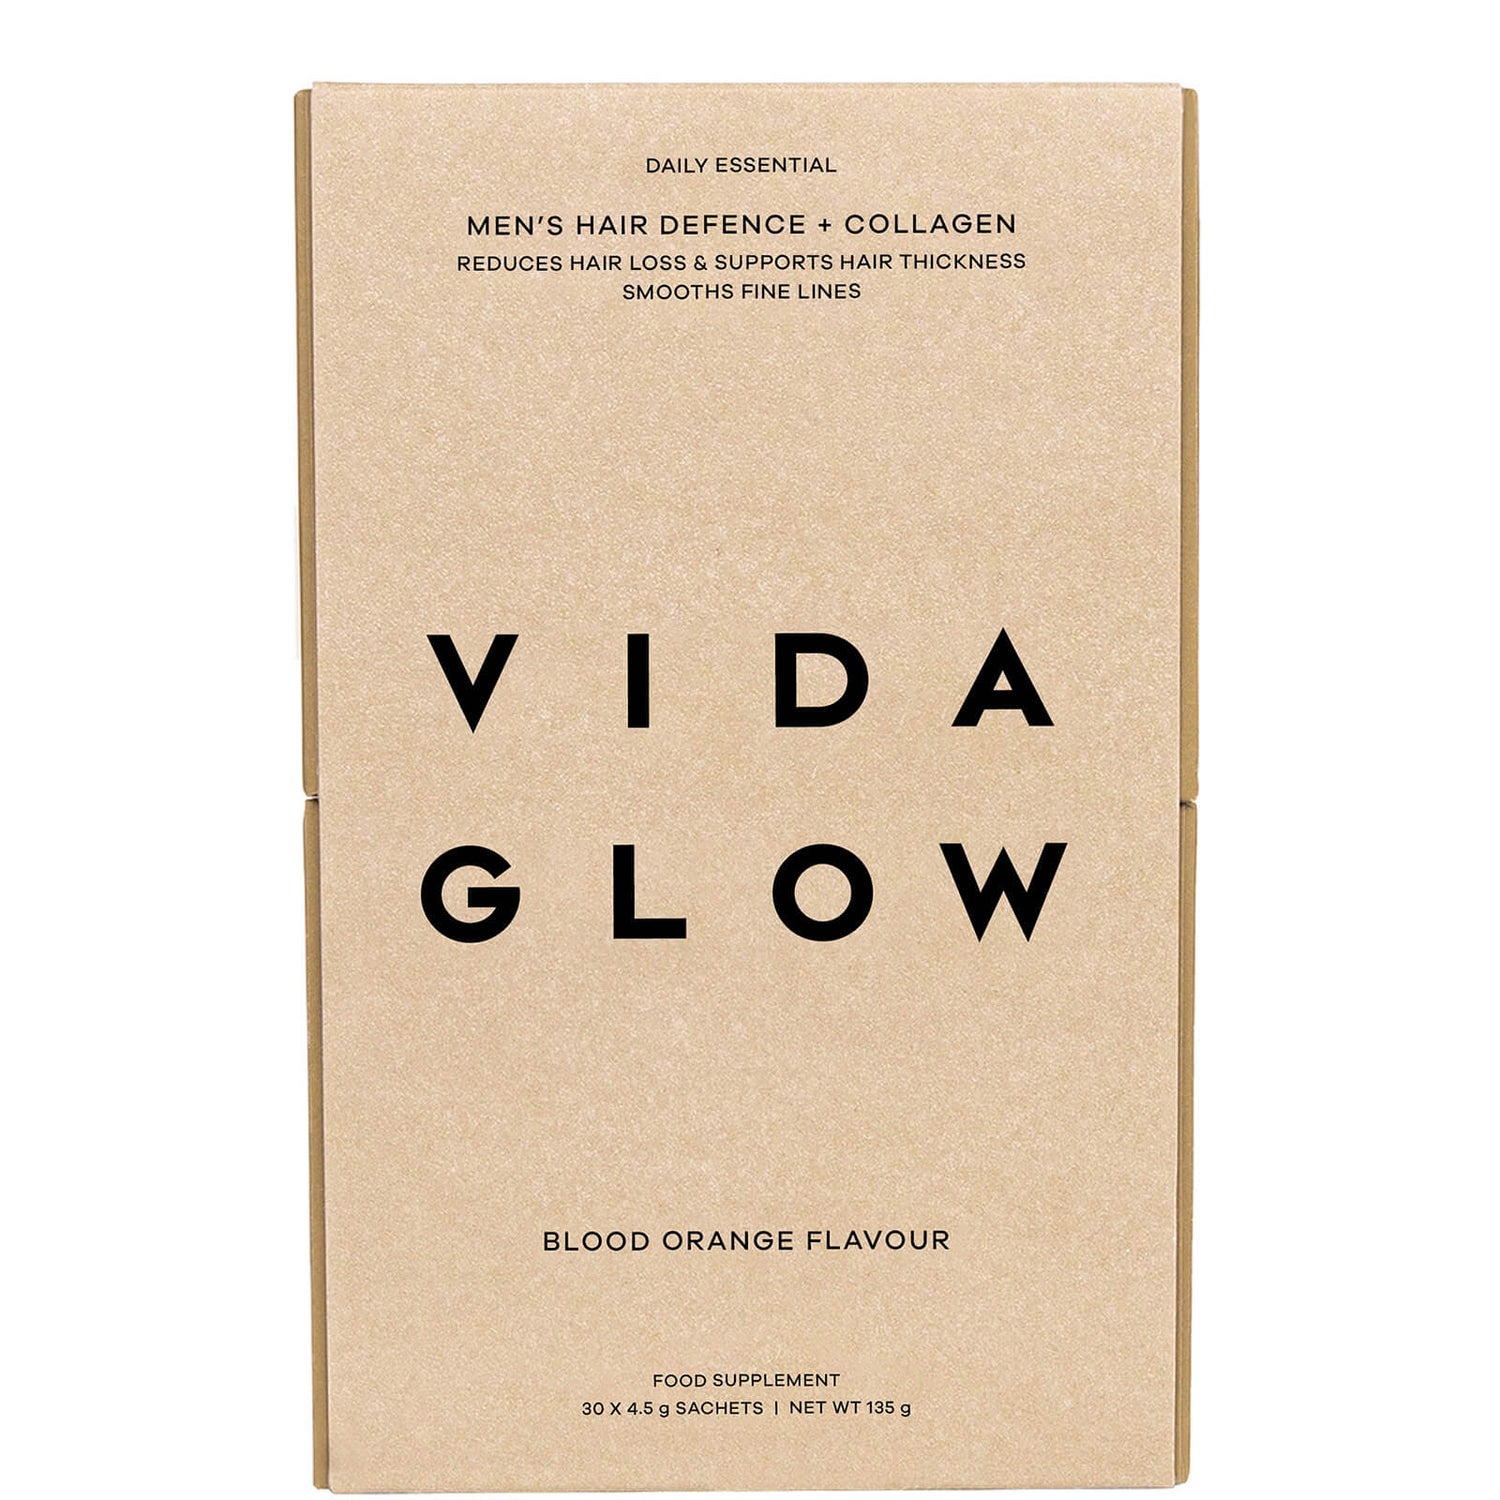 Vida Glow Men's Hair Defence and Collagen - 30 x 4.5g